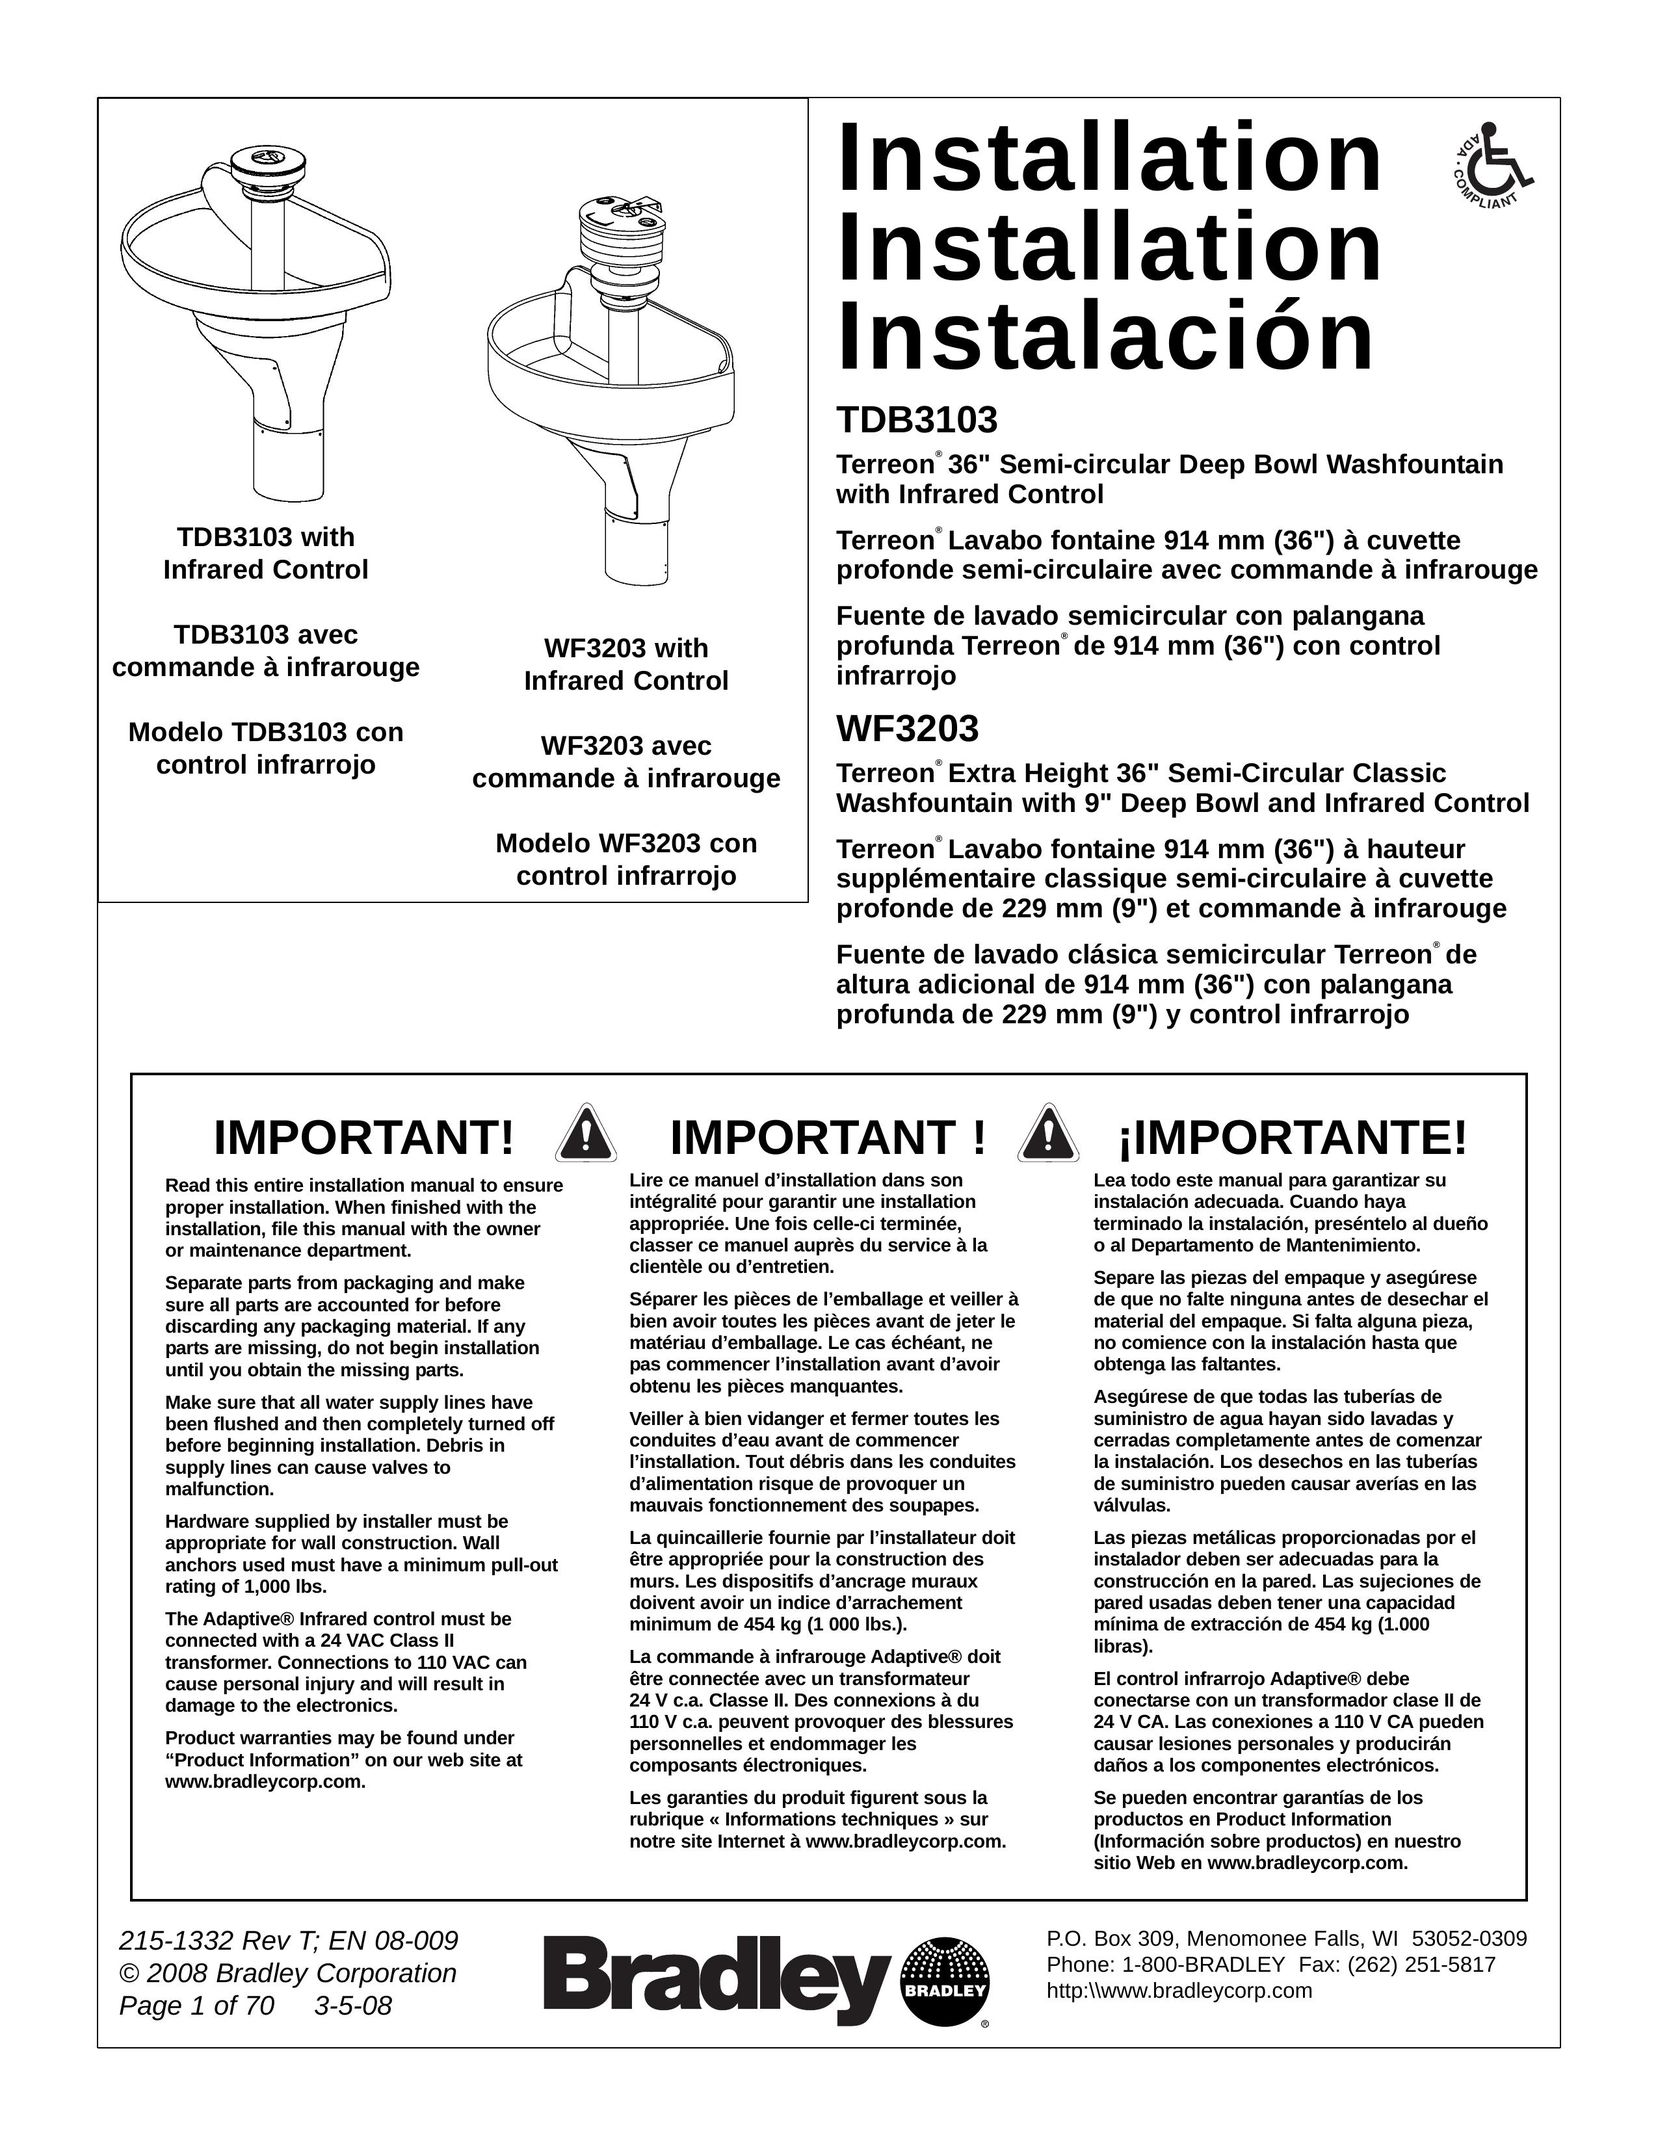 Bradley Brand Furniture WF3203 Plumbing Product User Manual